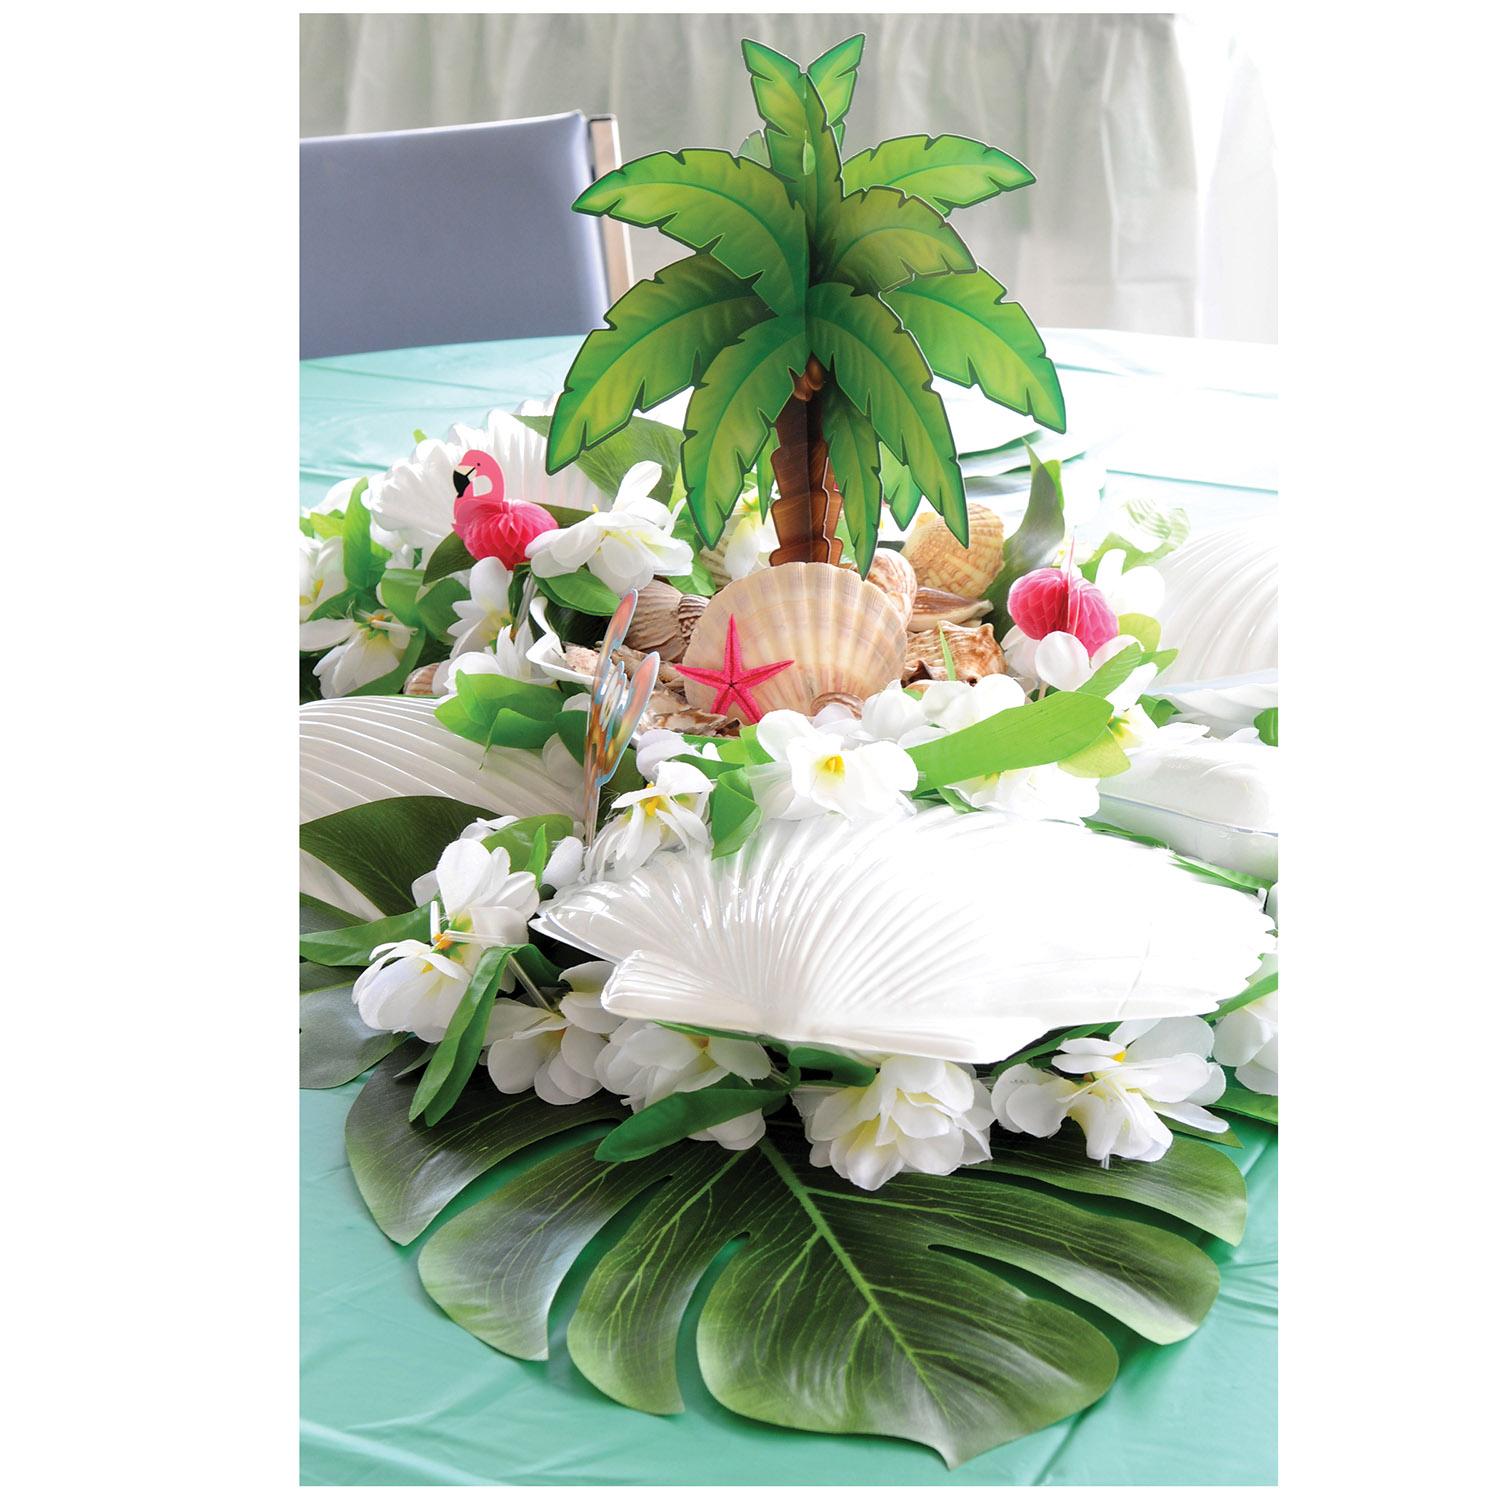 Beistle Luau Party 3-D Palm Tree Centerpiece